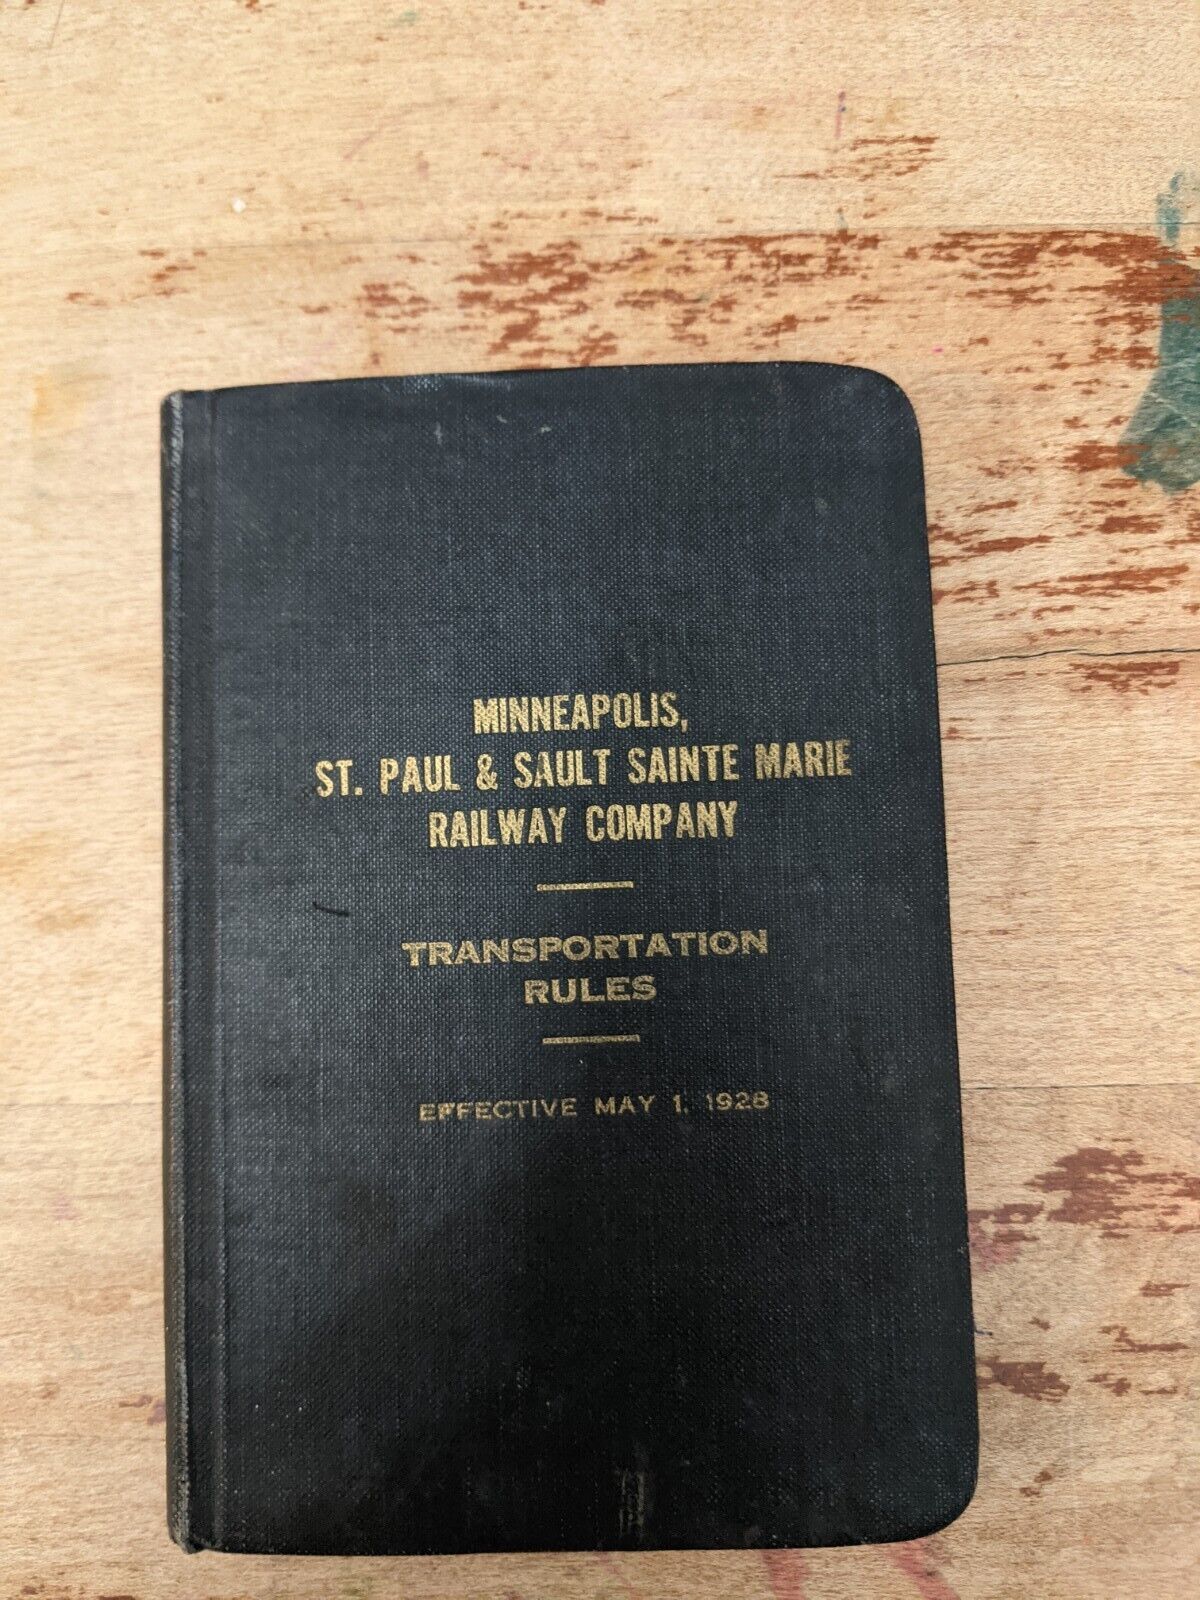 Minneapolis St. Paul & Sault Sainte Marie Railway Company SOO 1928 Rules Book